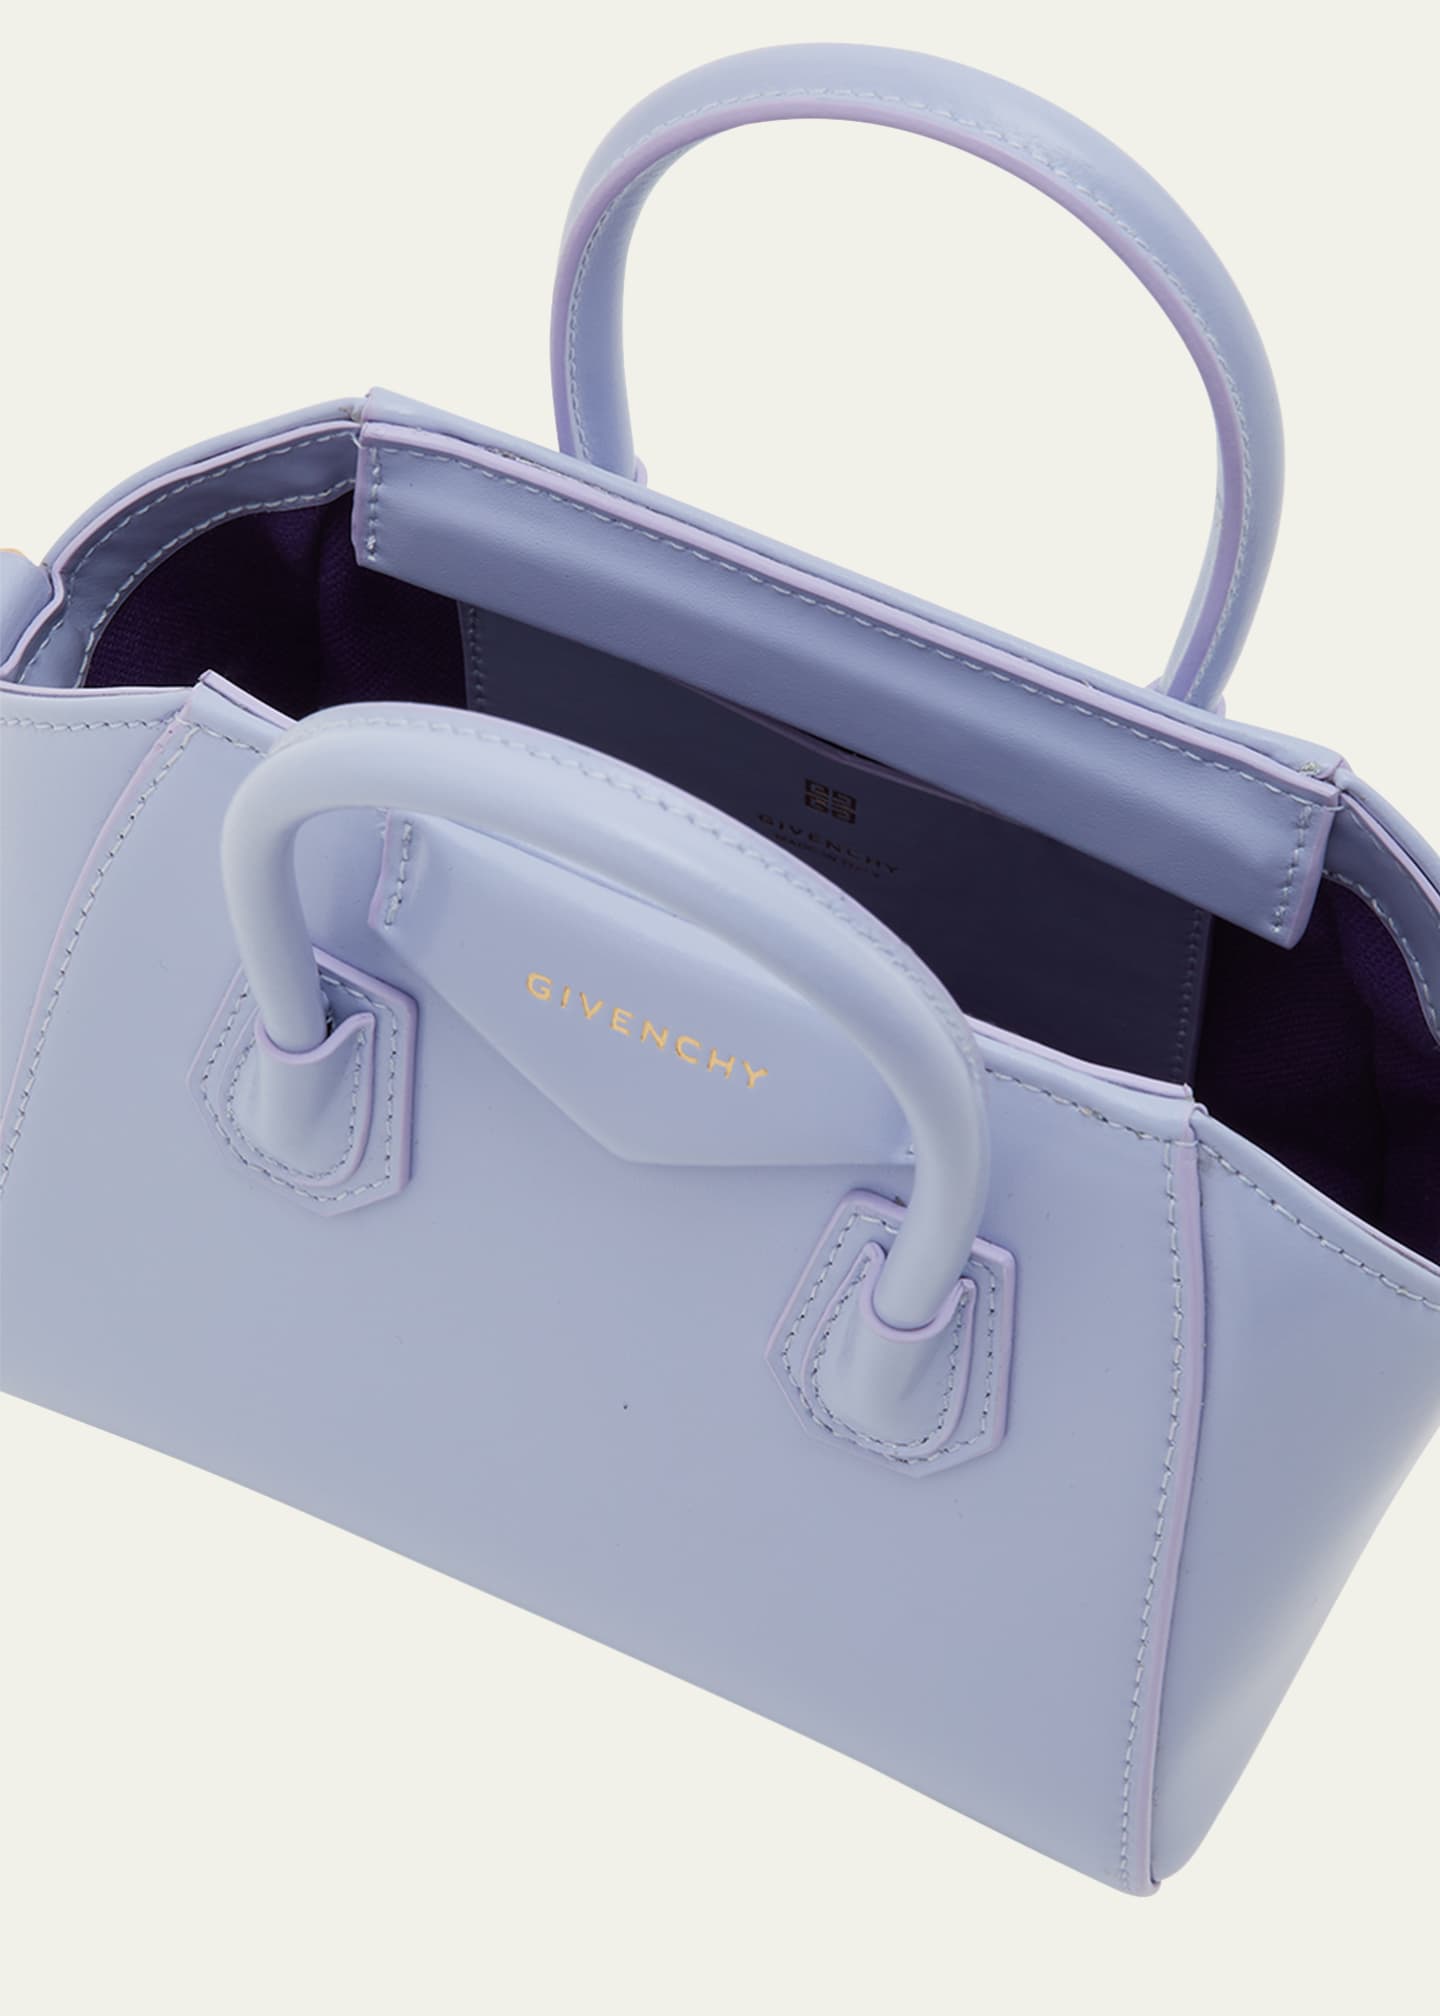 Women's Box Leather 'antigona Toy' Bag by Givenchy